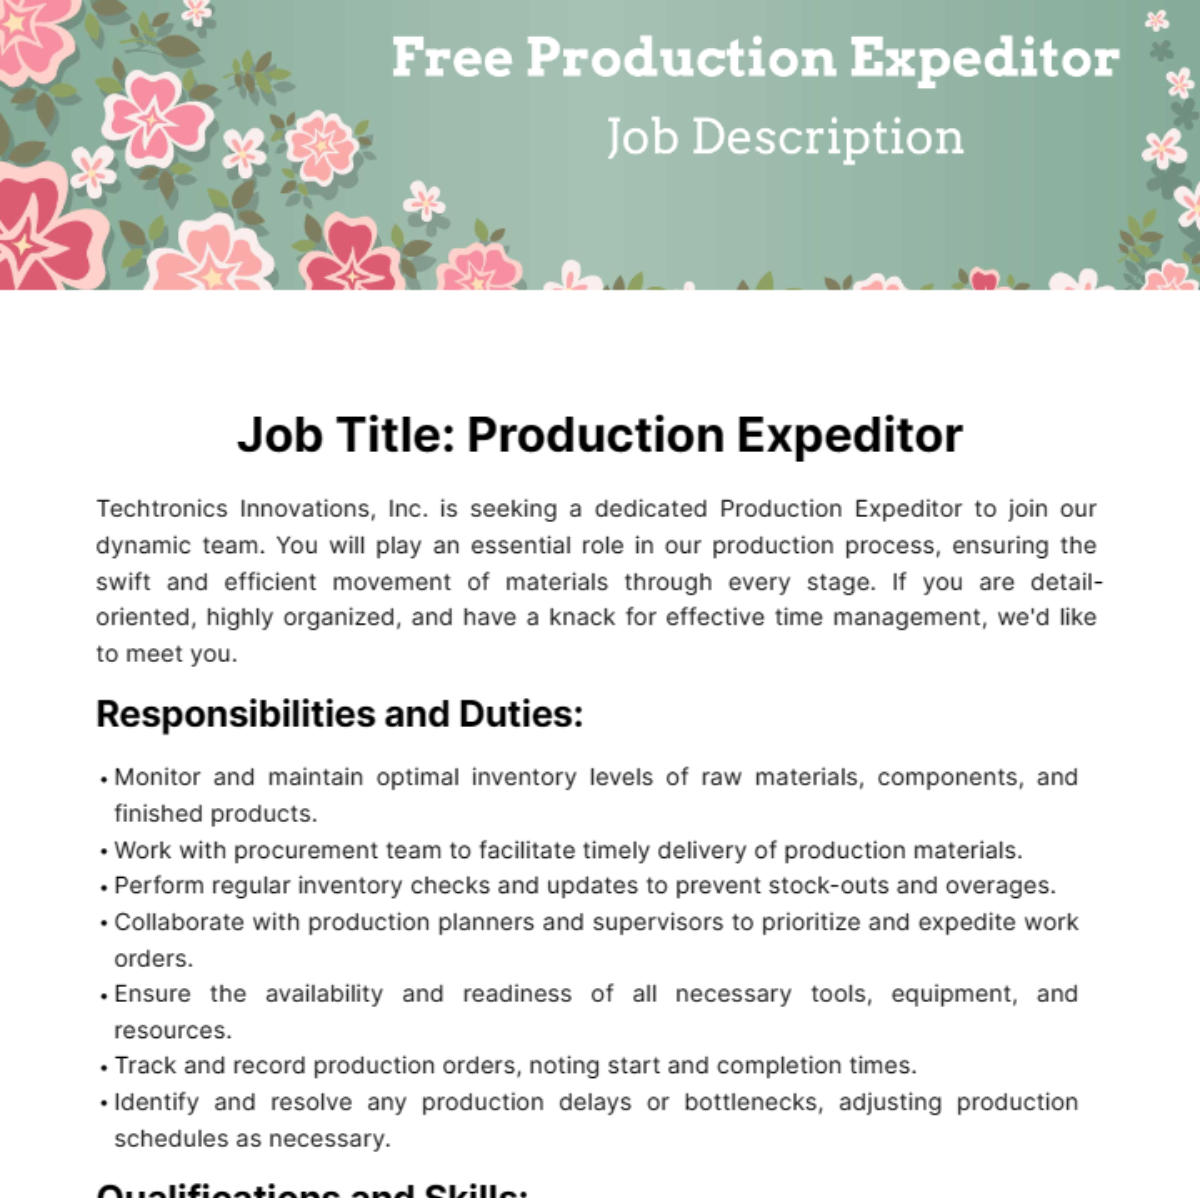 Free Production Expeditor Job Description Template